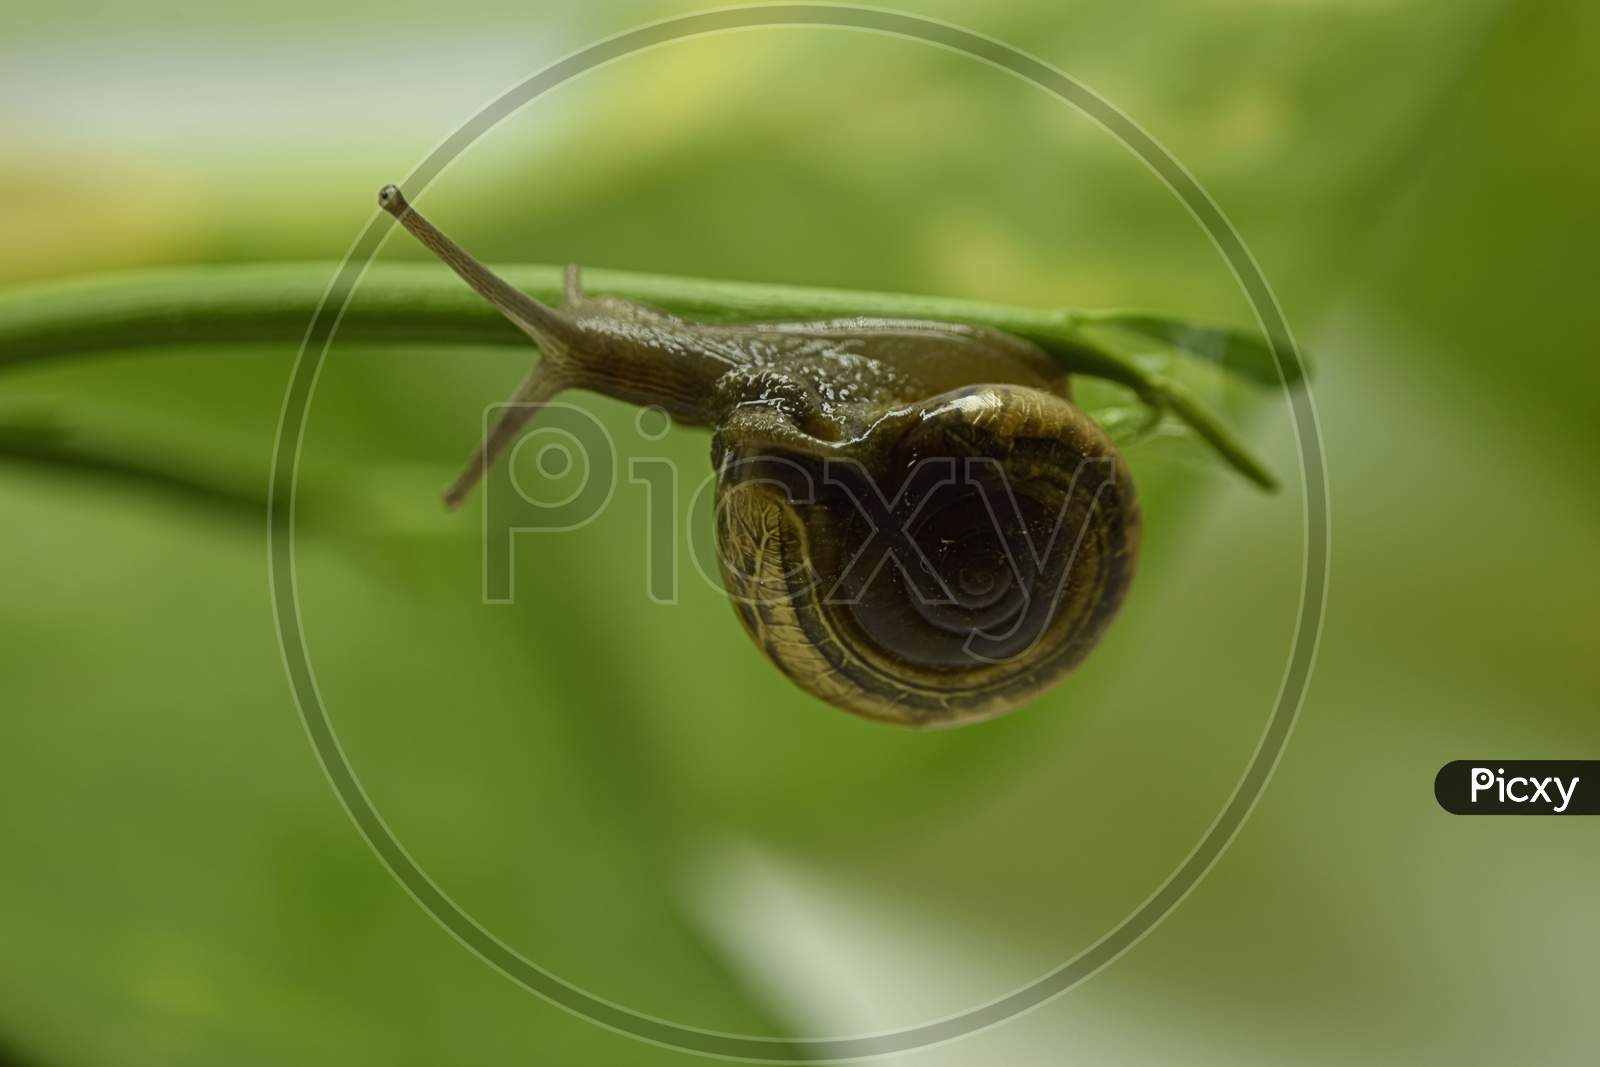 A Closeup Photograph Of A Snail.